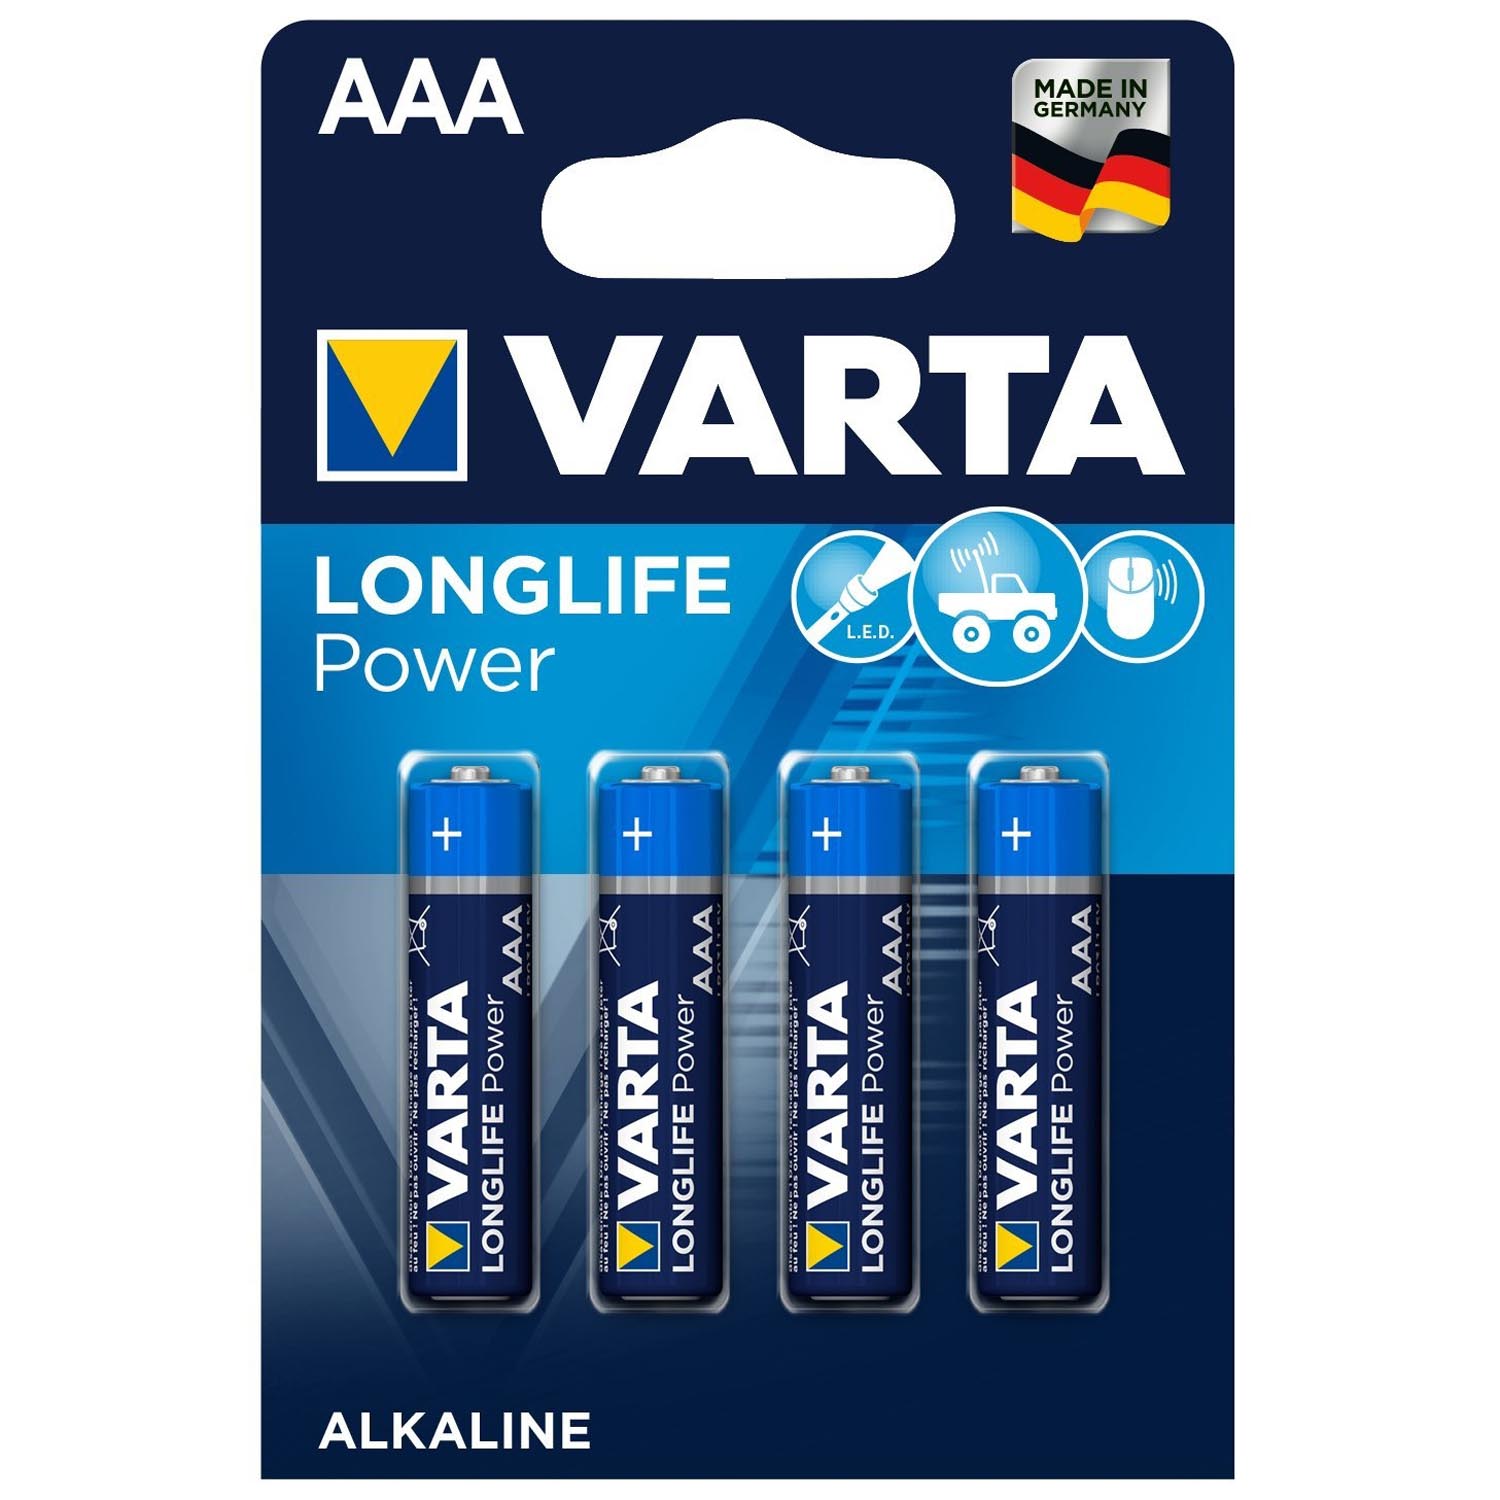 VARTA LONGLIFE Power Micro AAA 4903 LR03 MN2400 Alkaline Batterien 4er Blister